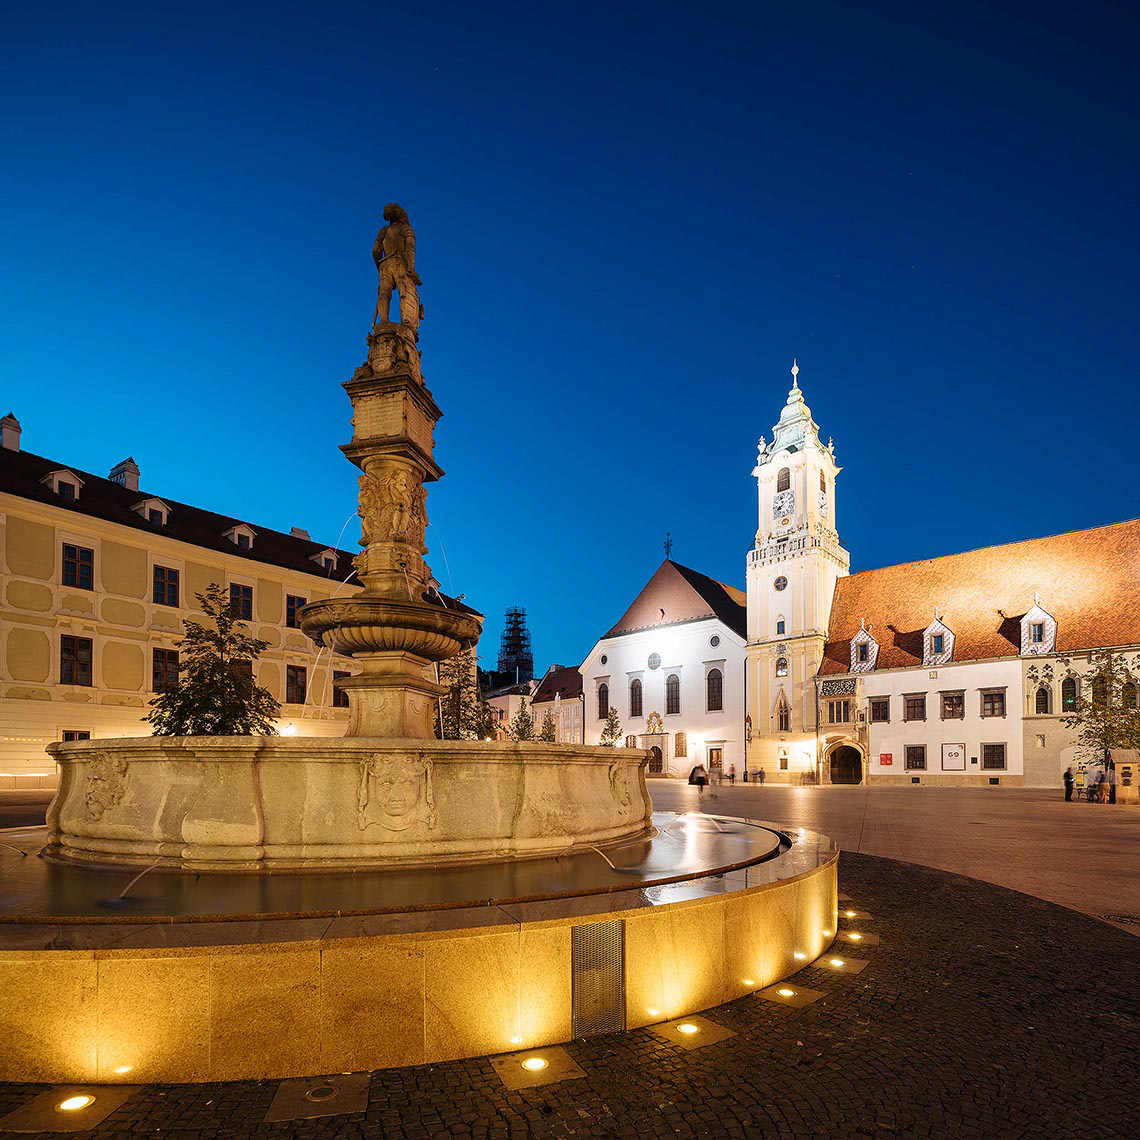 fountain-twilight-town-square-travel-photography-bratislava-slovakia